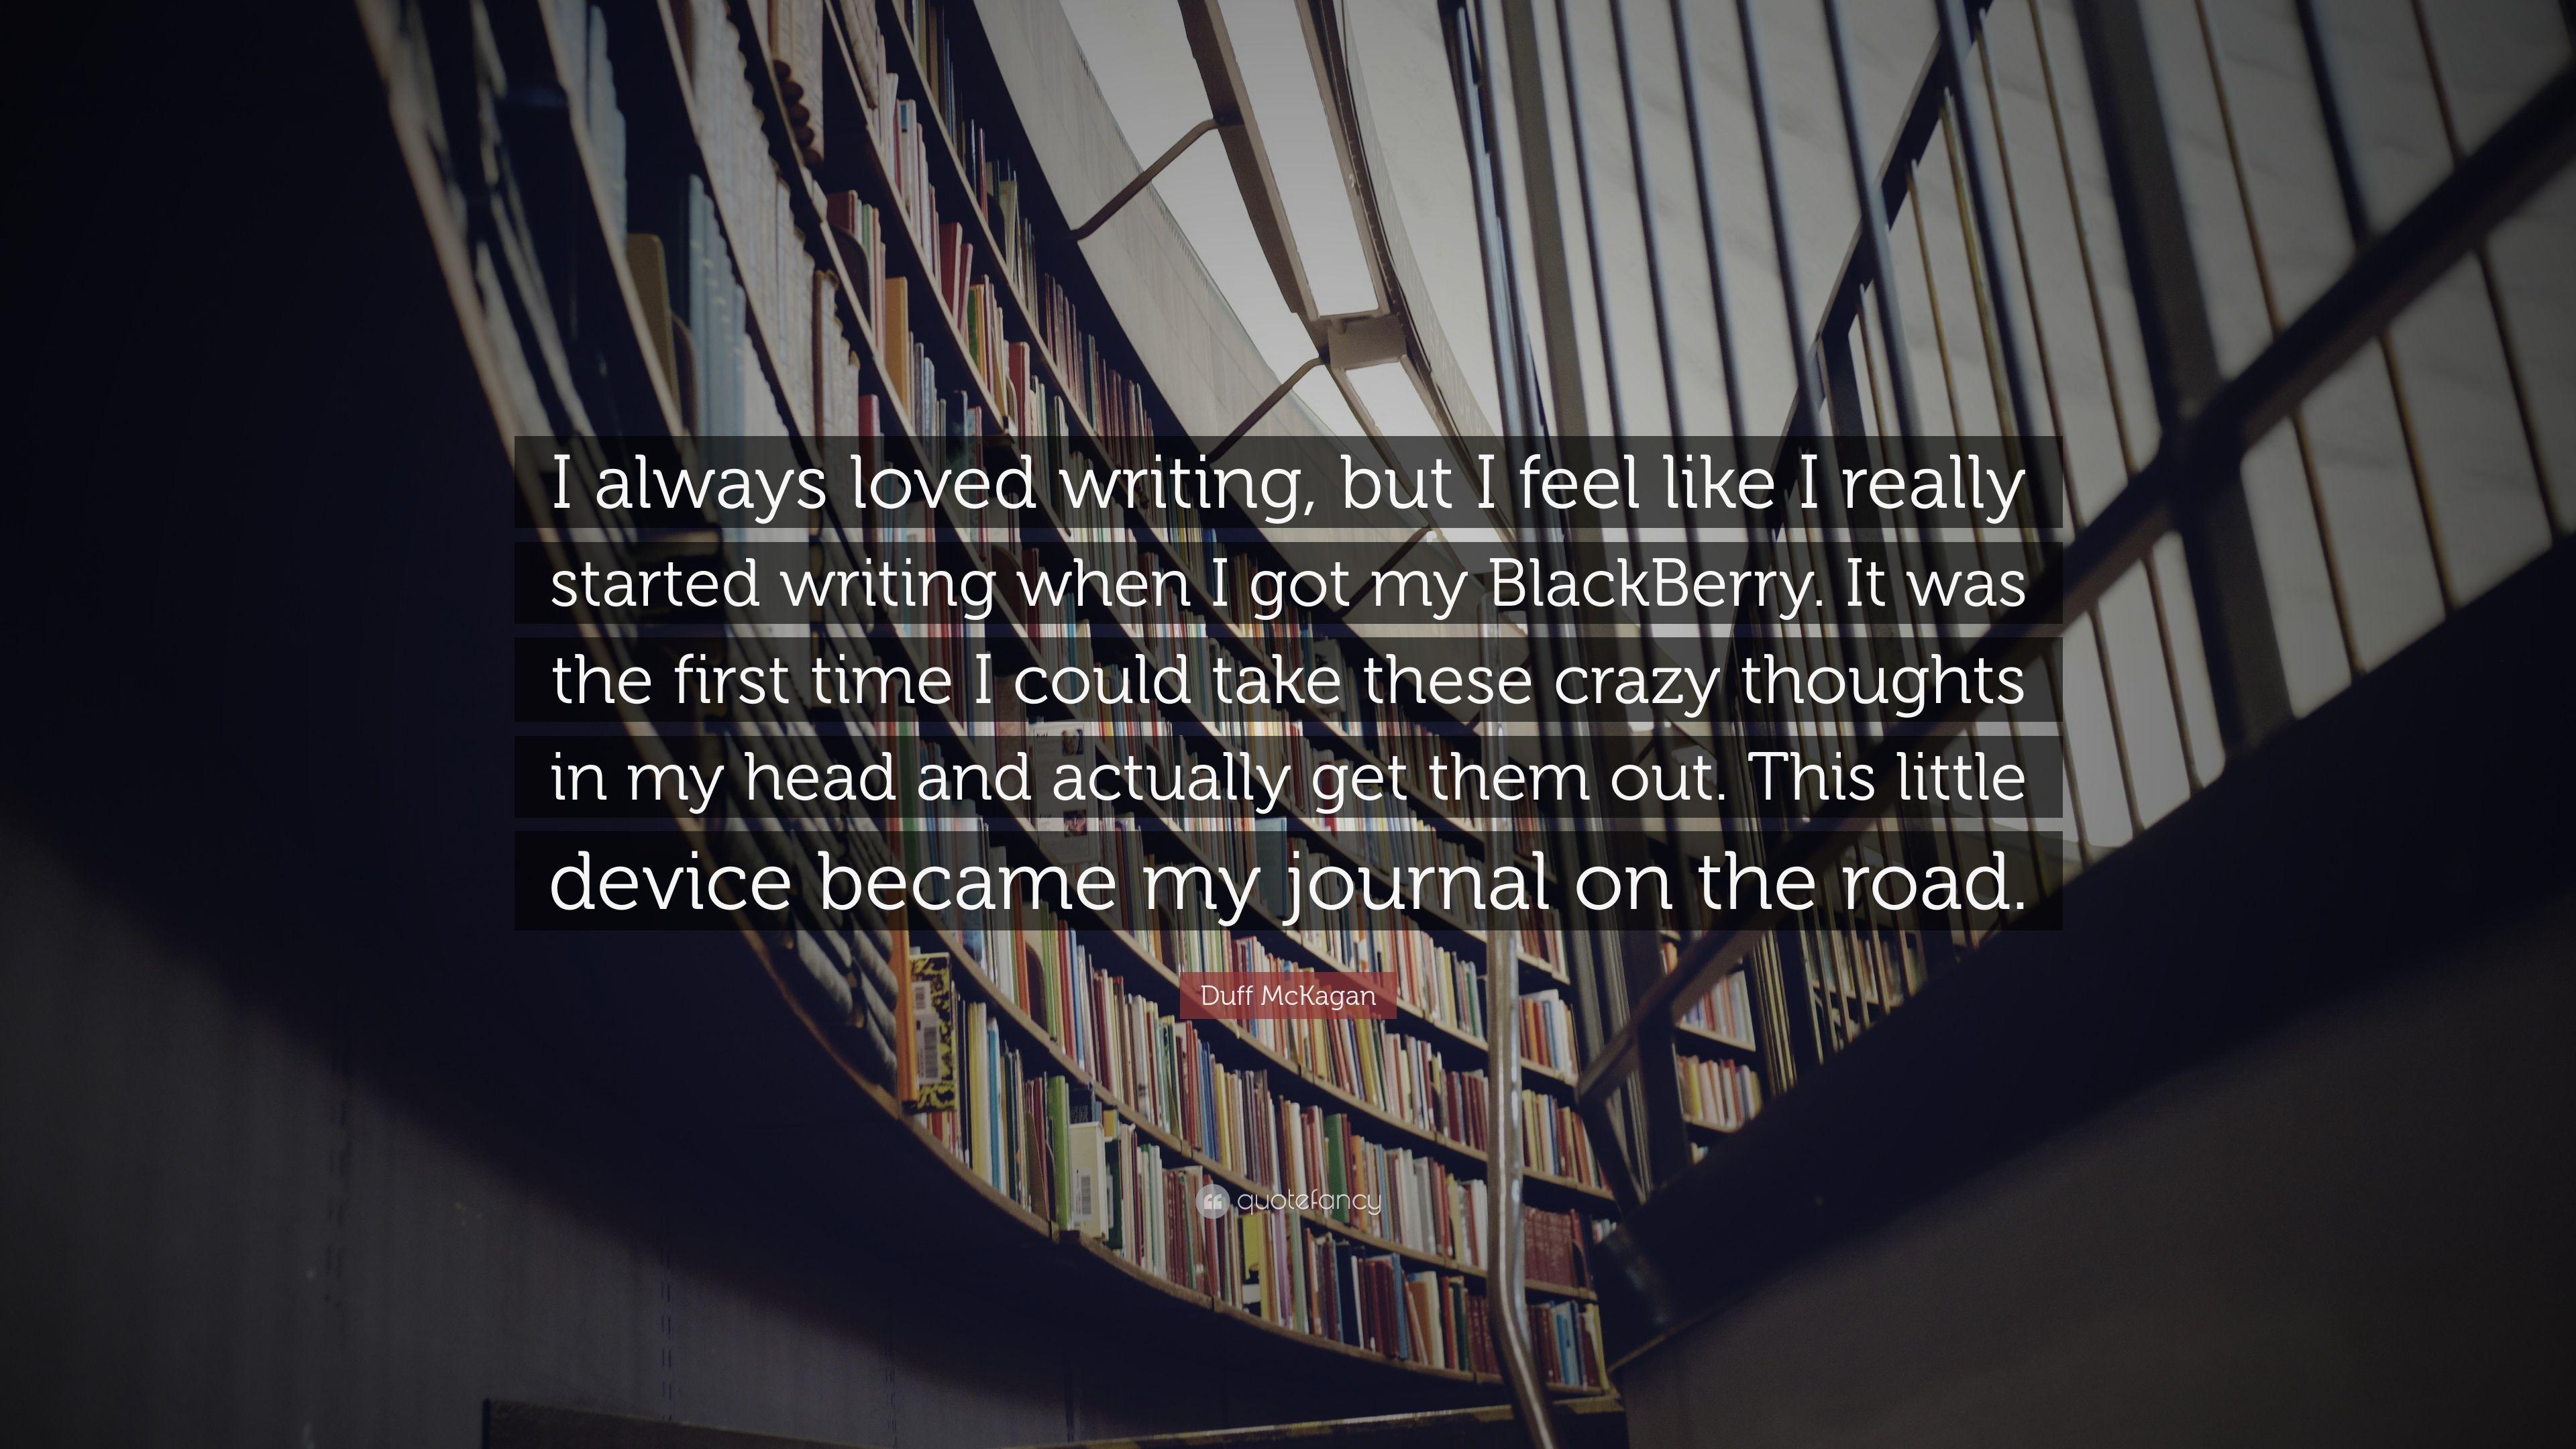 Duff McKagan Quote: “I always loved writing, but I feel like I